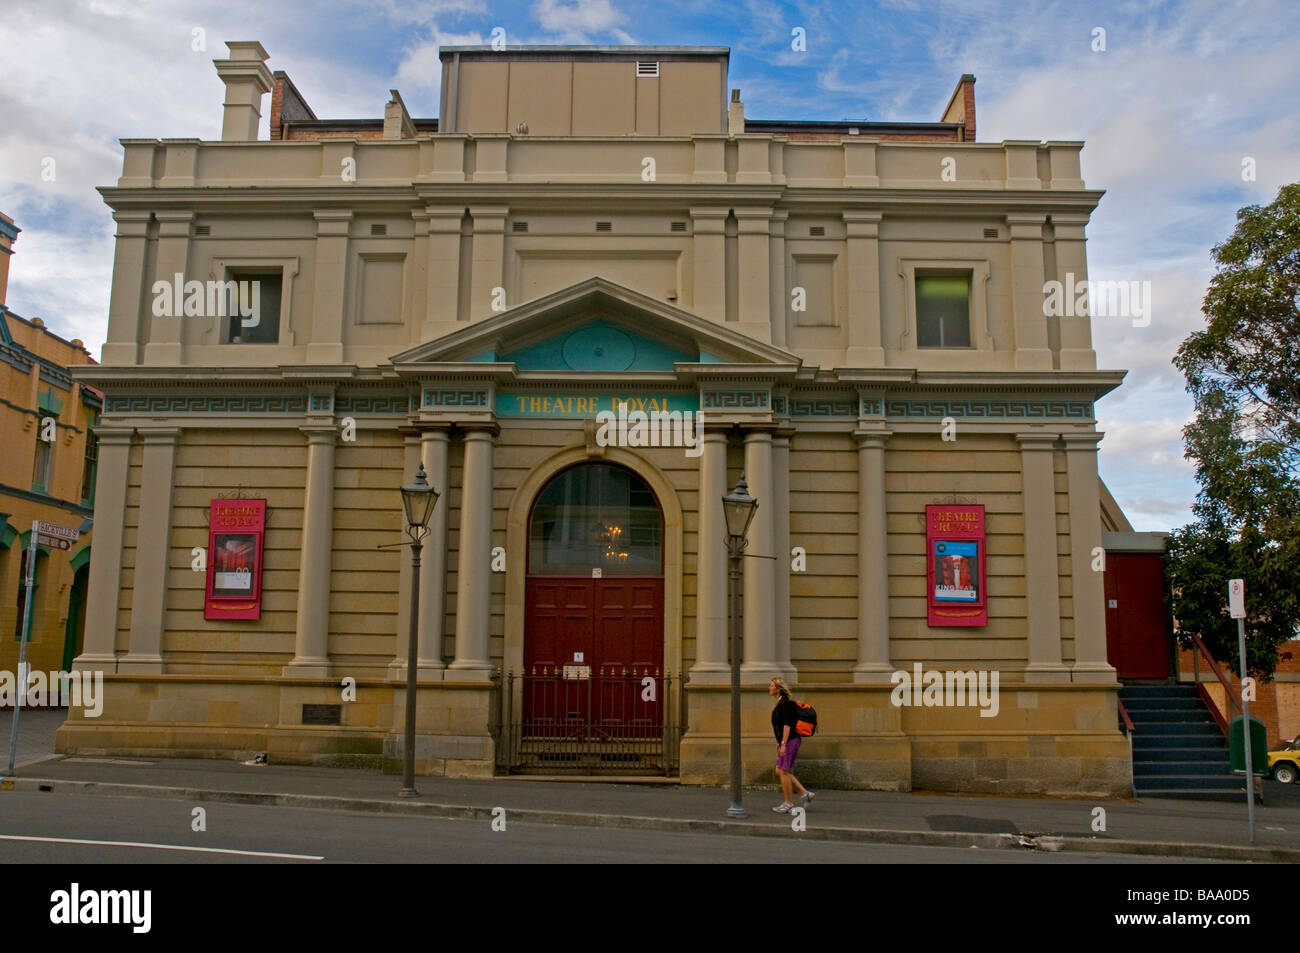 Australia s oldest theatre the Theatre Royal in Hobart Tasmania Stock Photo